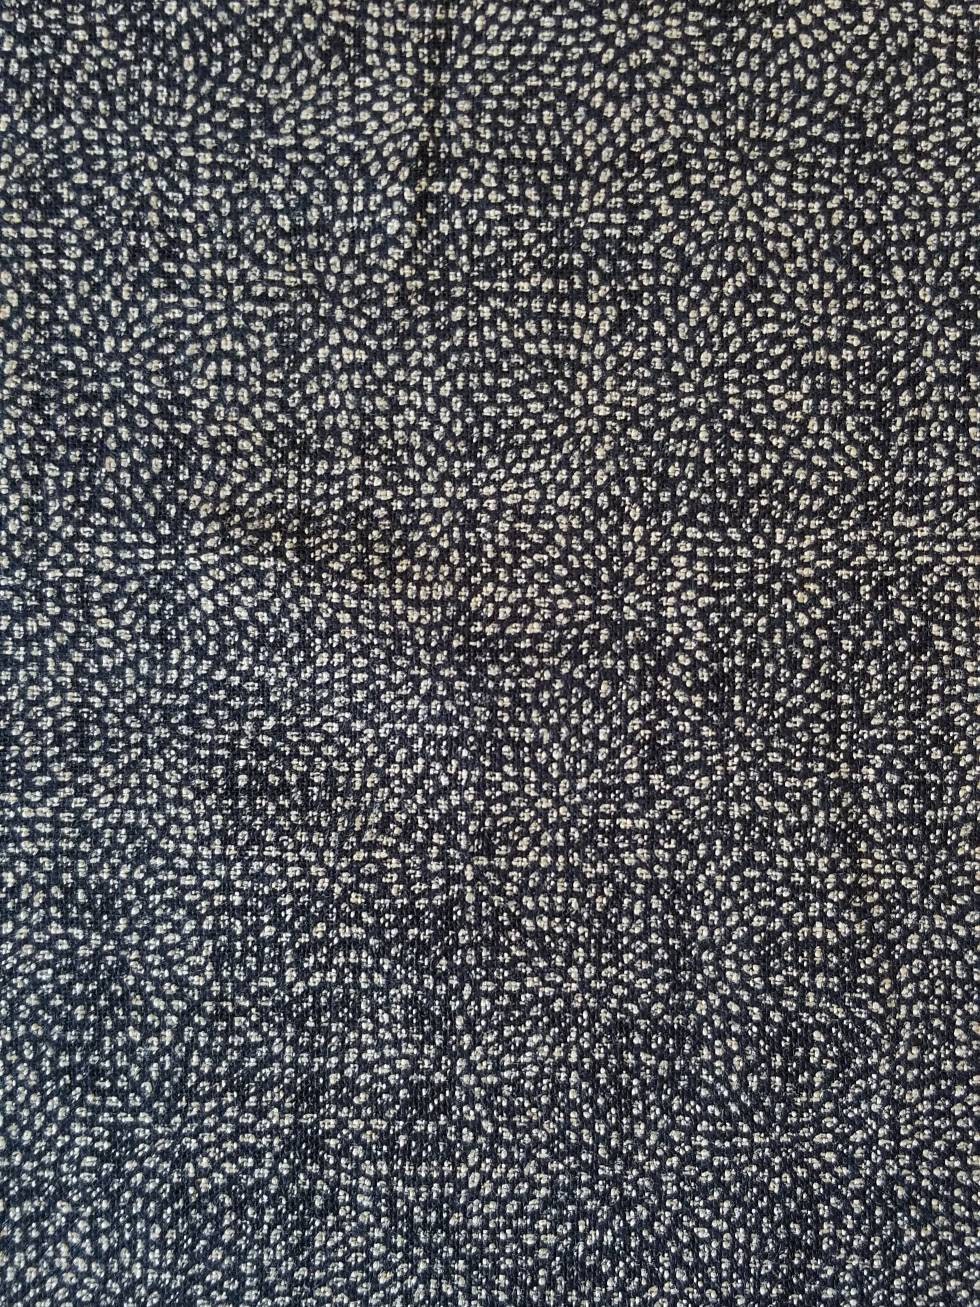 Sevenberry exploding dots navy indigo blue Japanese cotton | Etsy